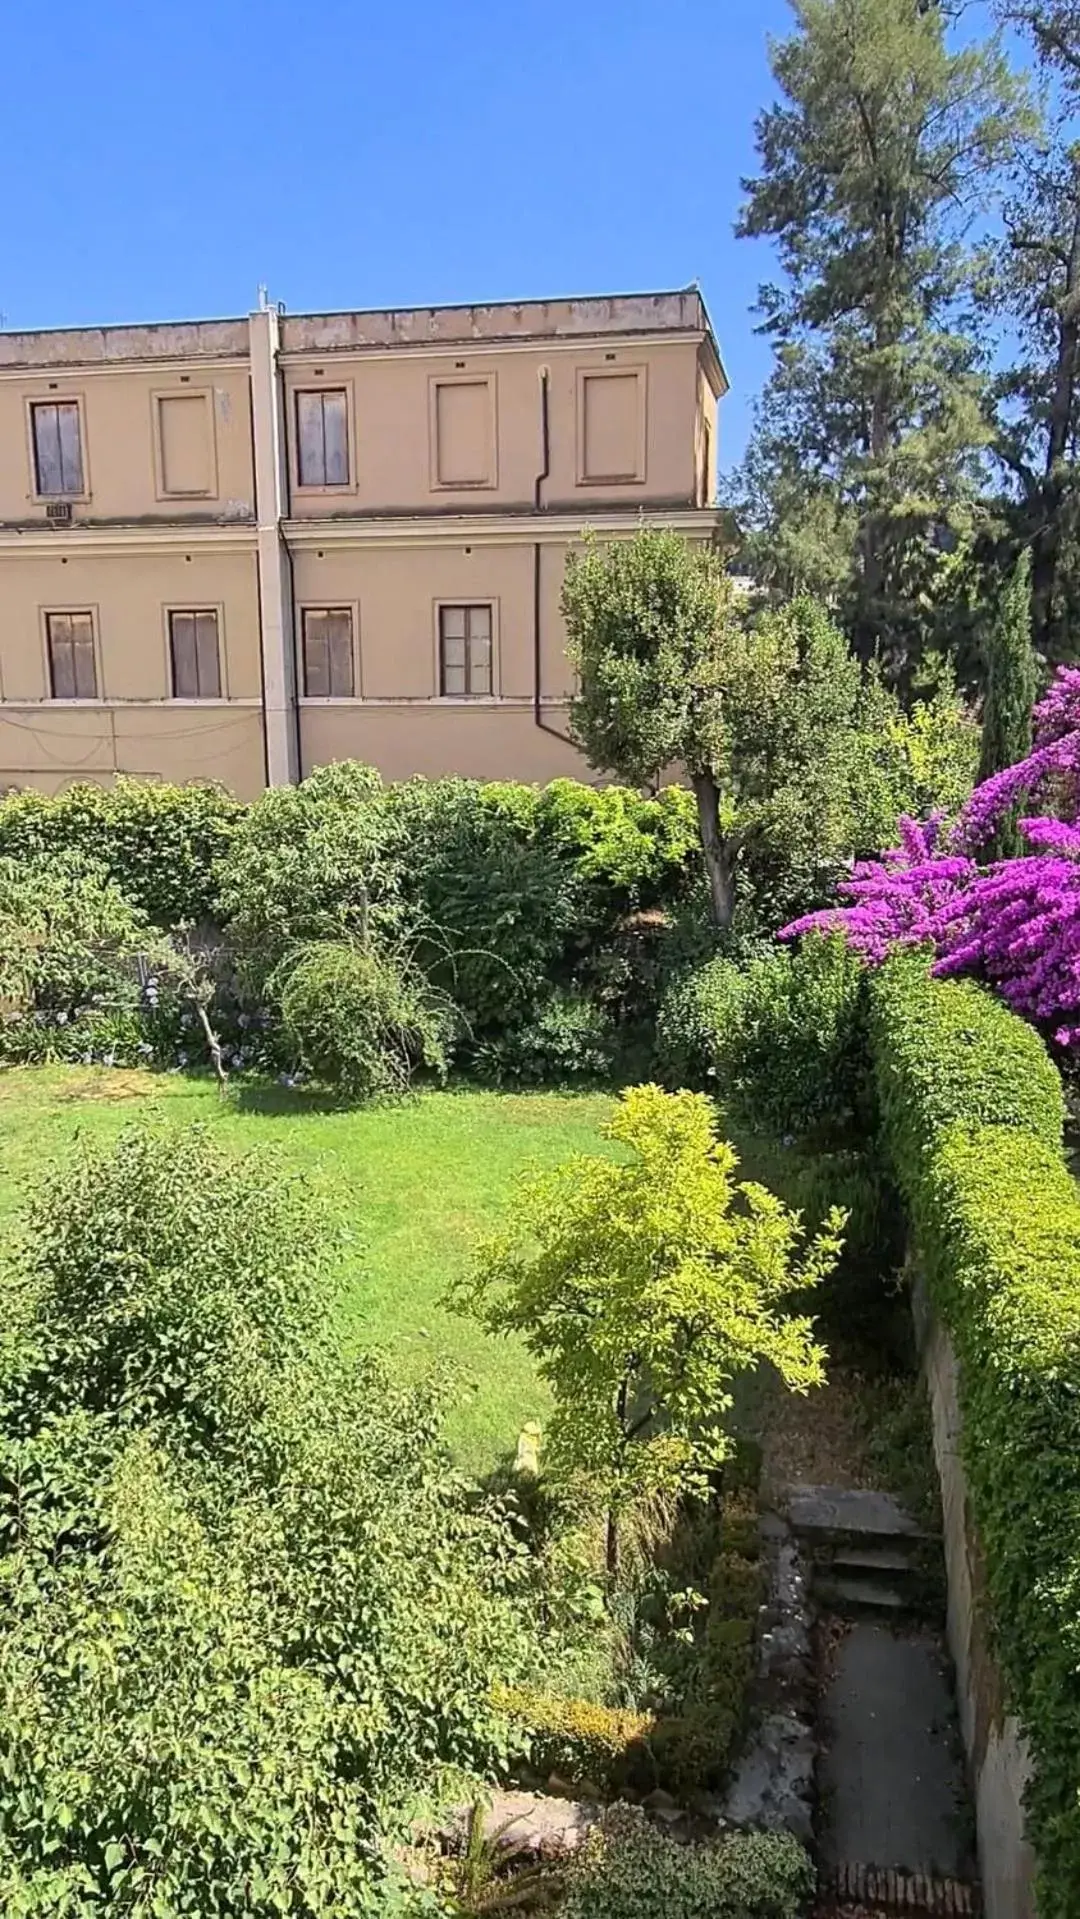 Bird's eye view, Property Building in Villa Riari Garden